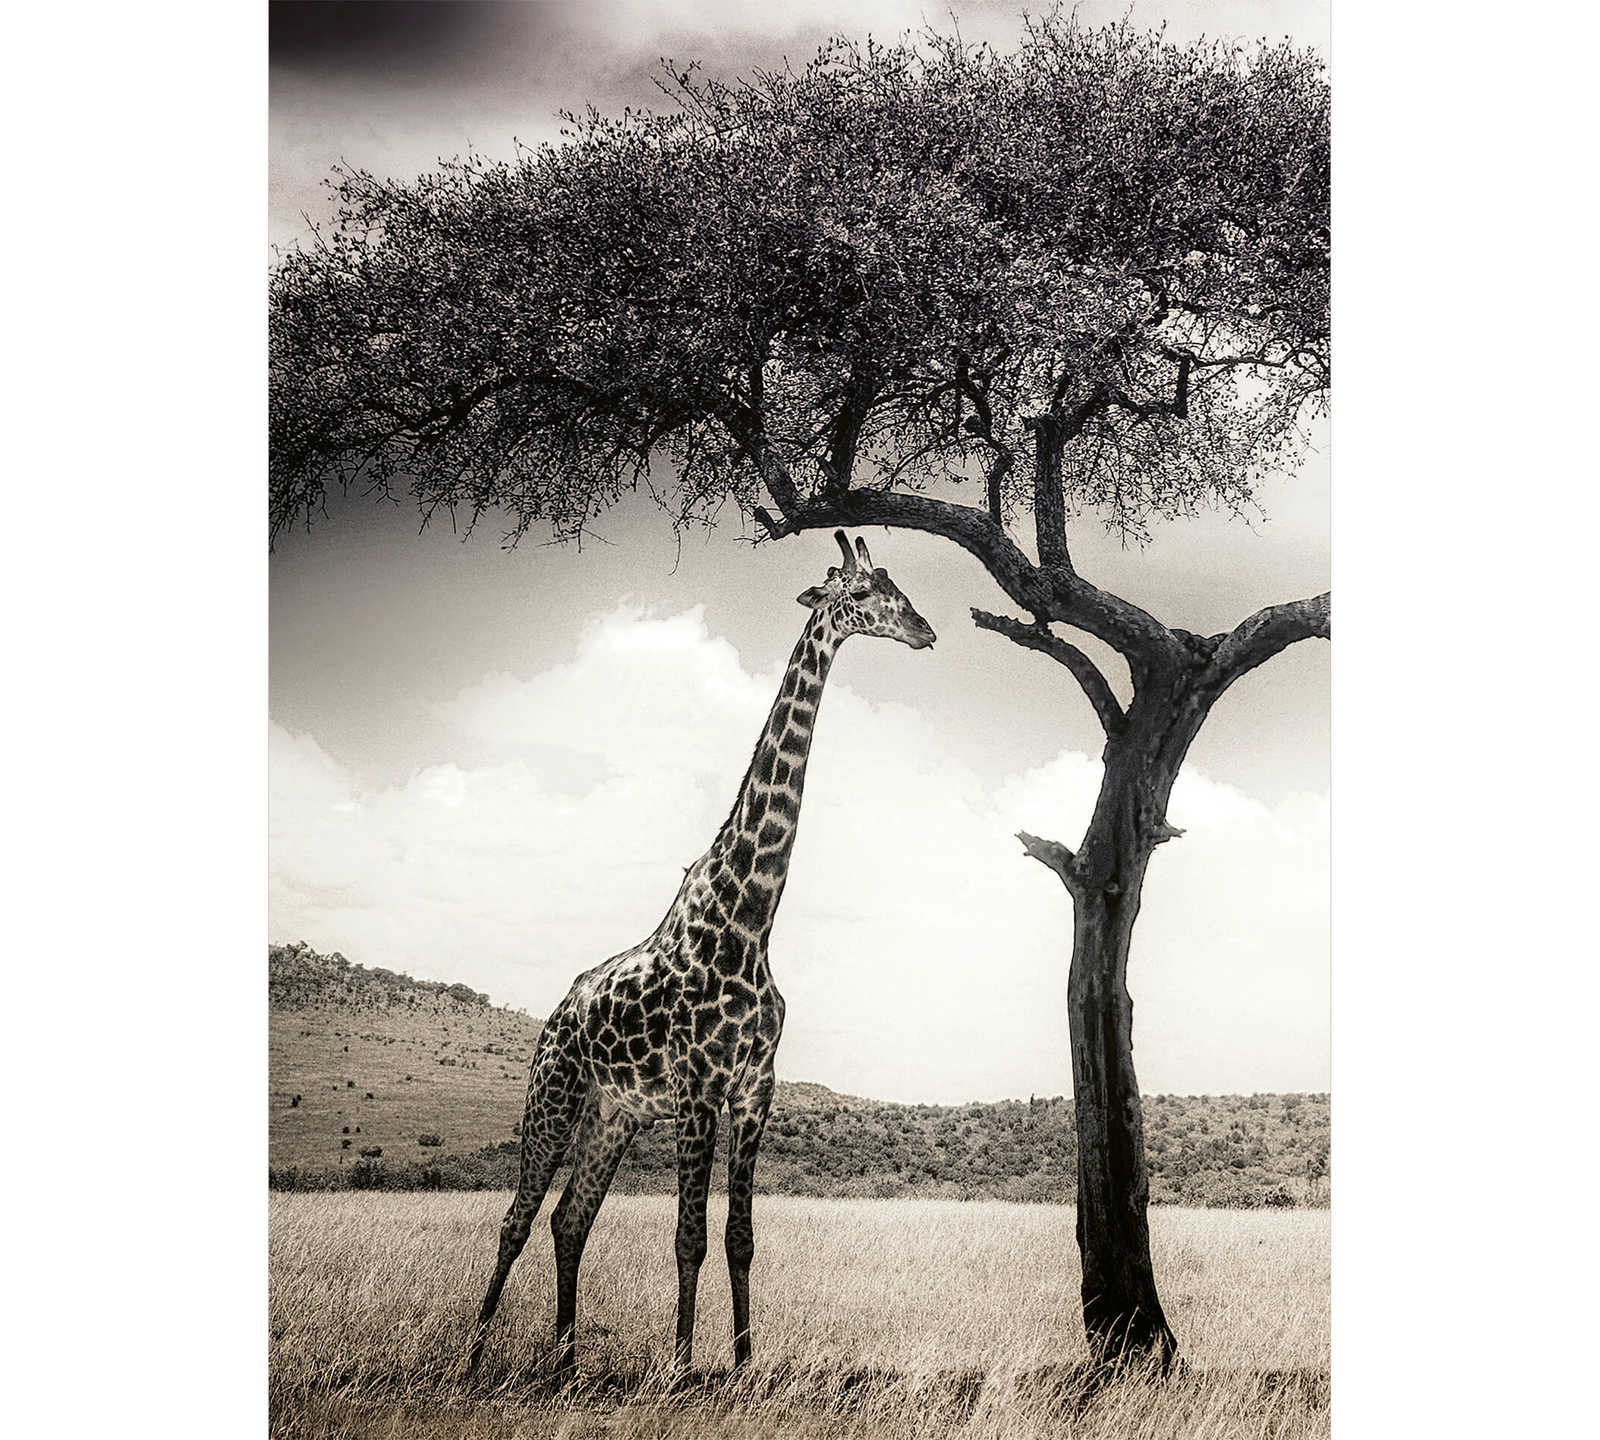         Photo wallpaper giraffe in savannah - grey, white, black
    